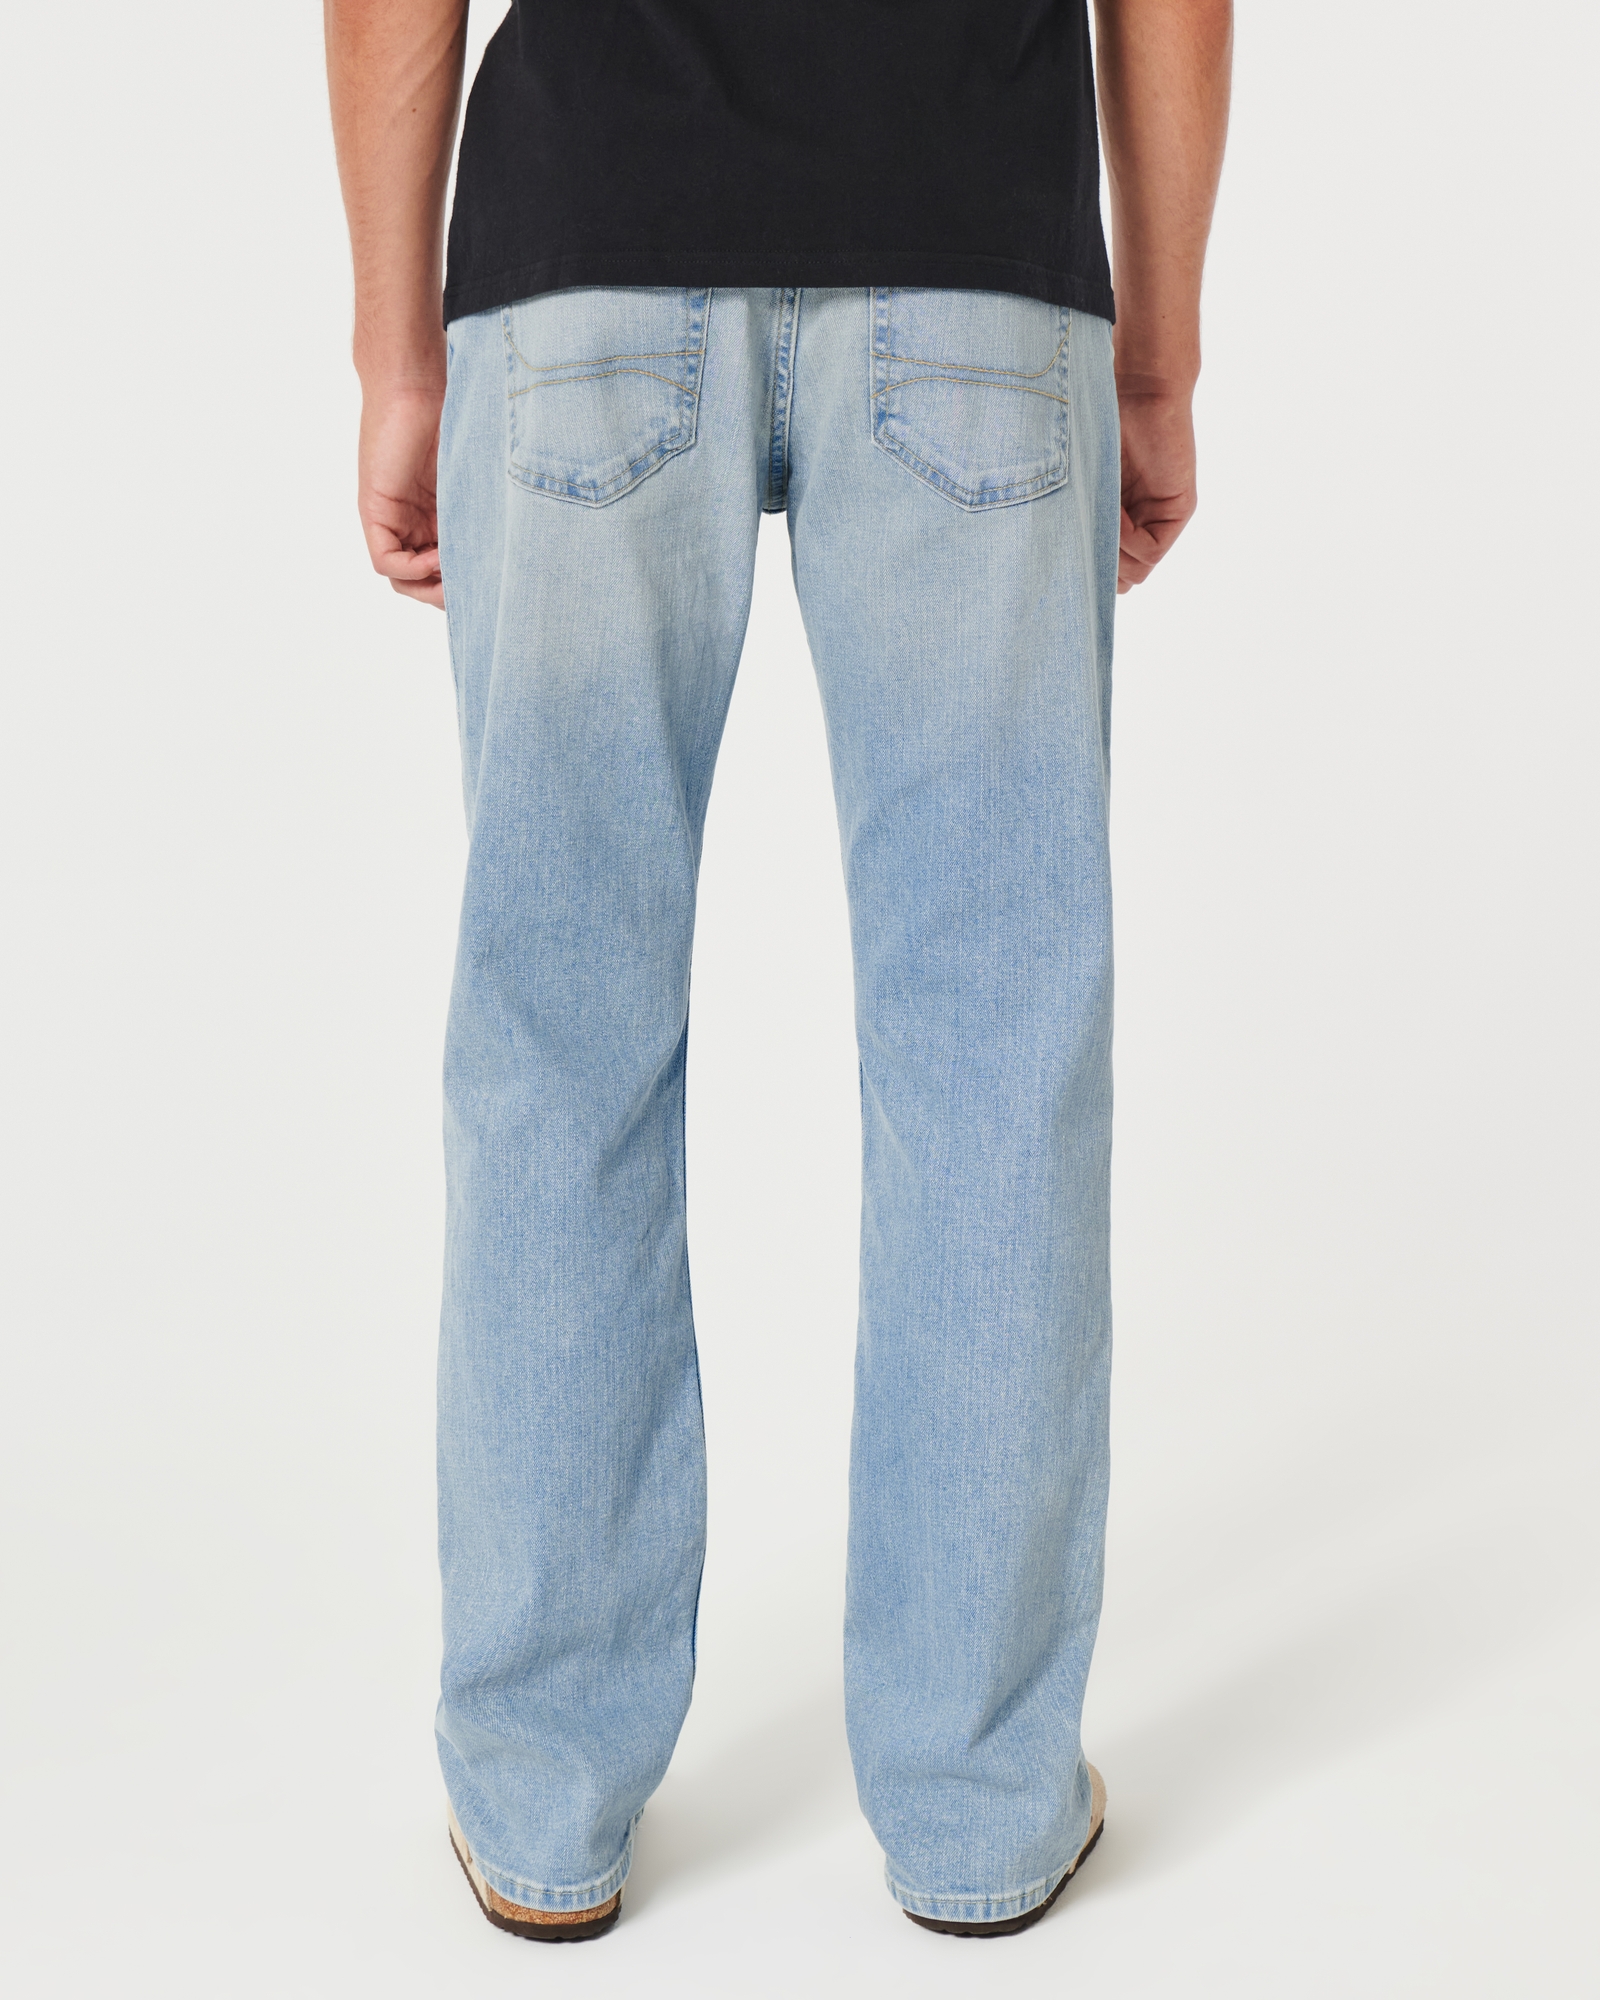 Hollister Co. Baggy, Loose Jeans for Men